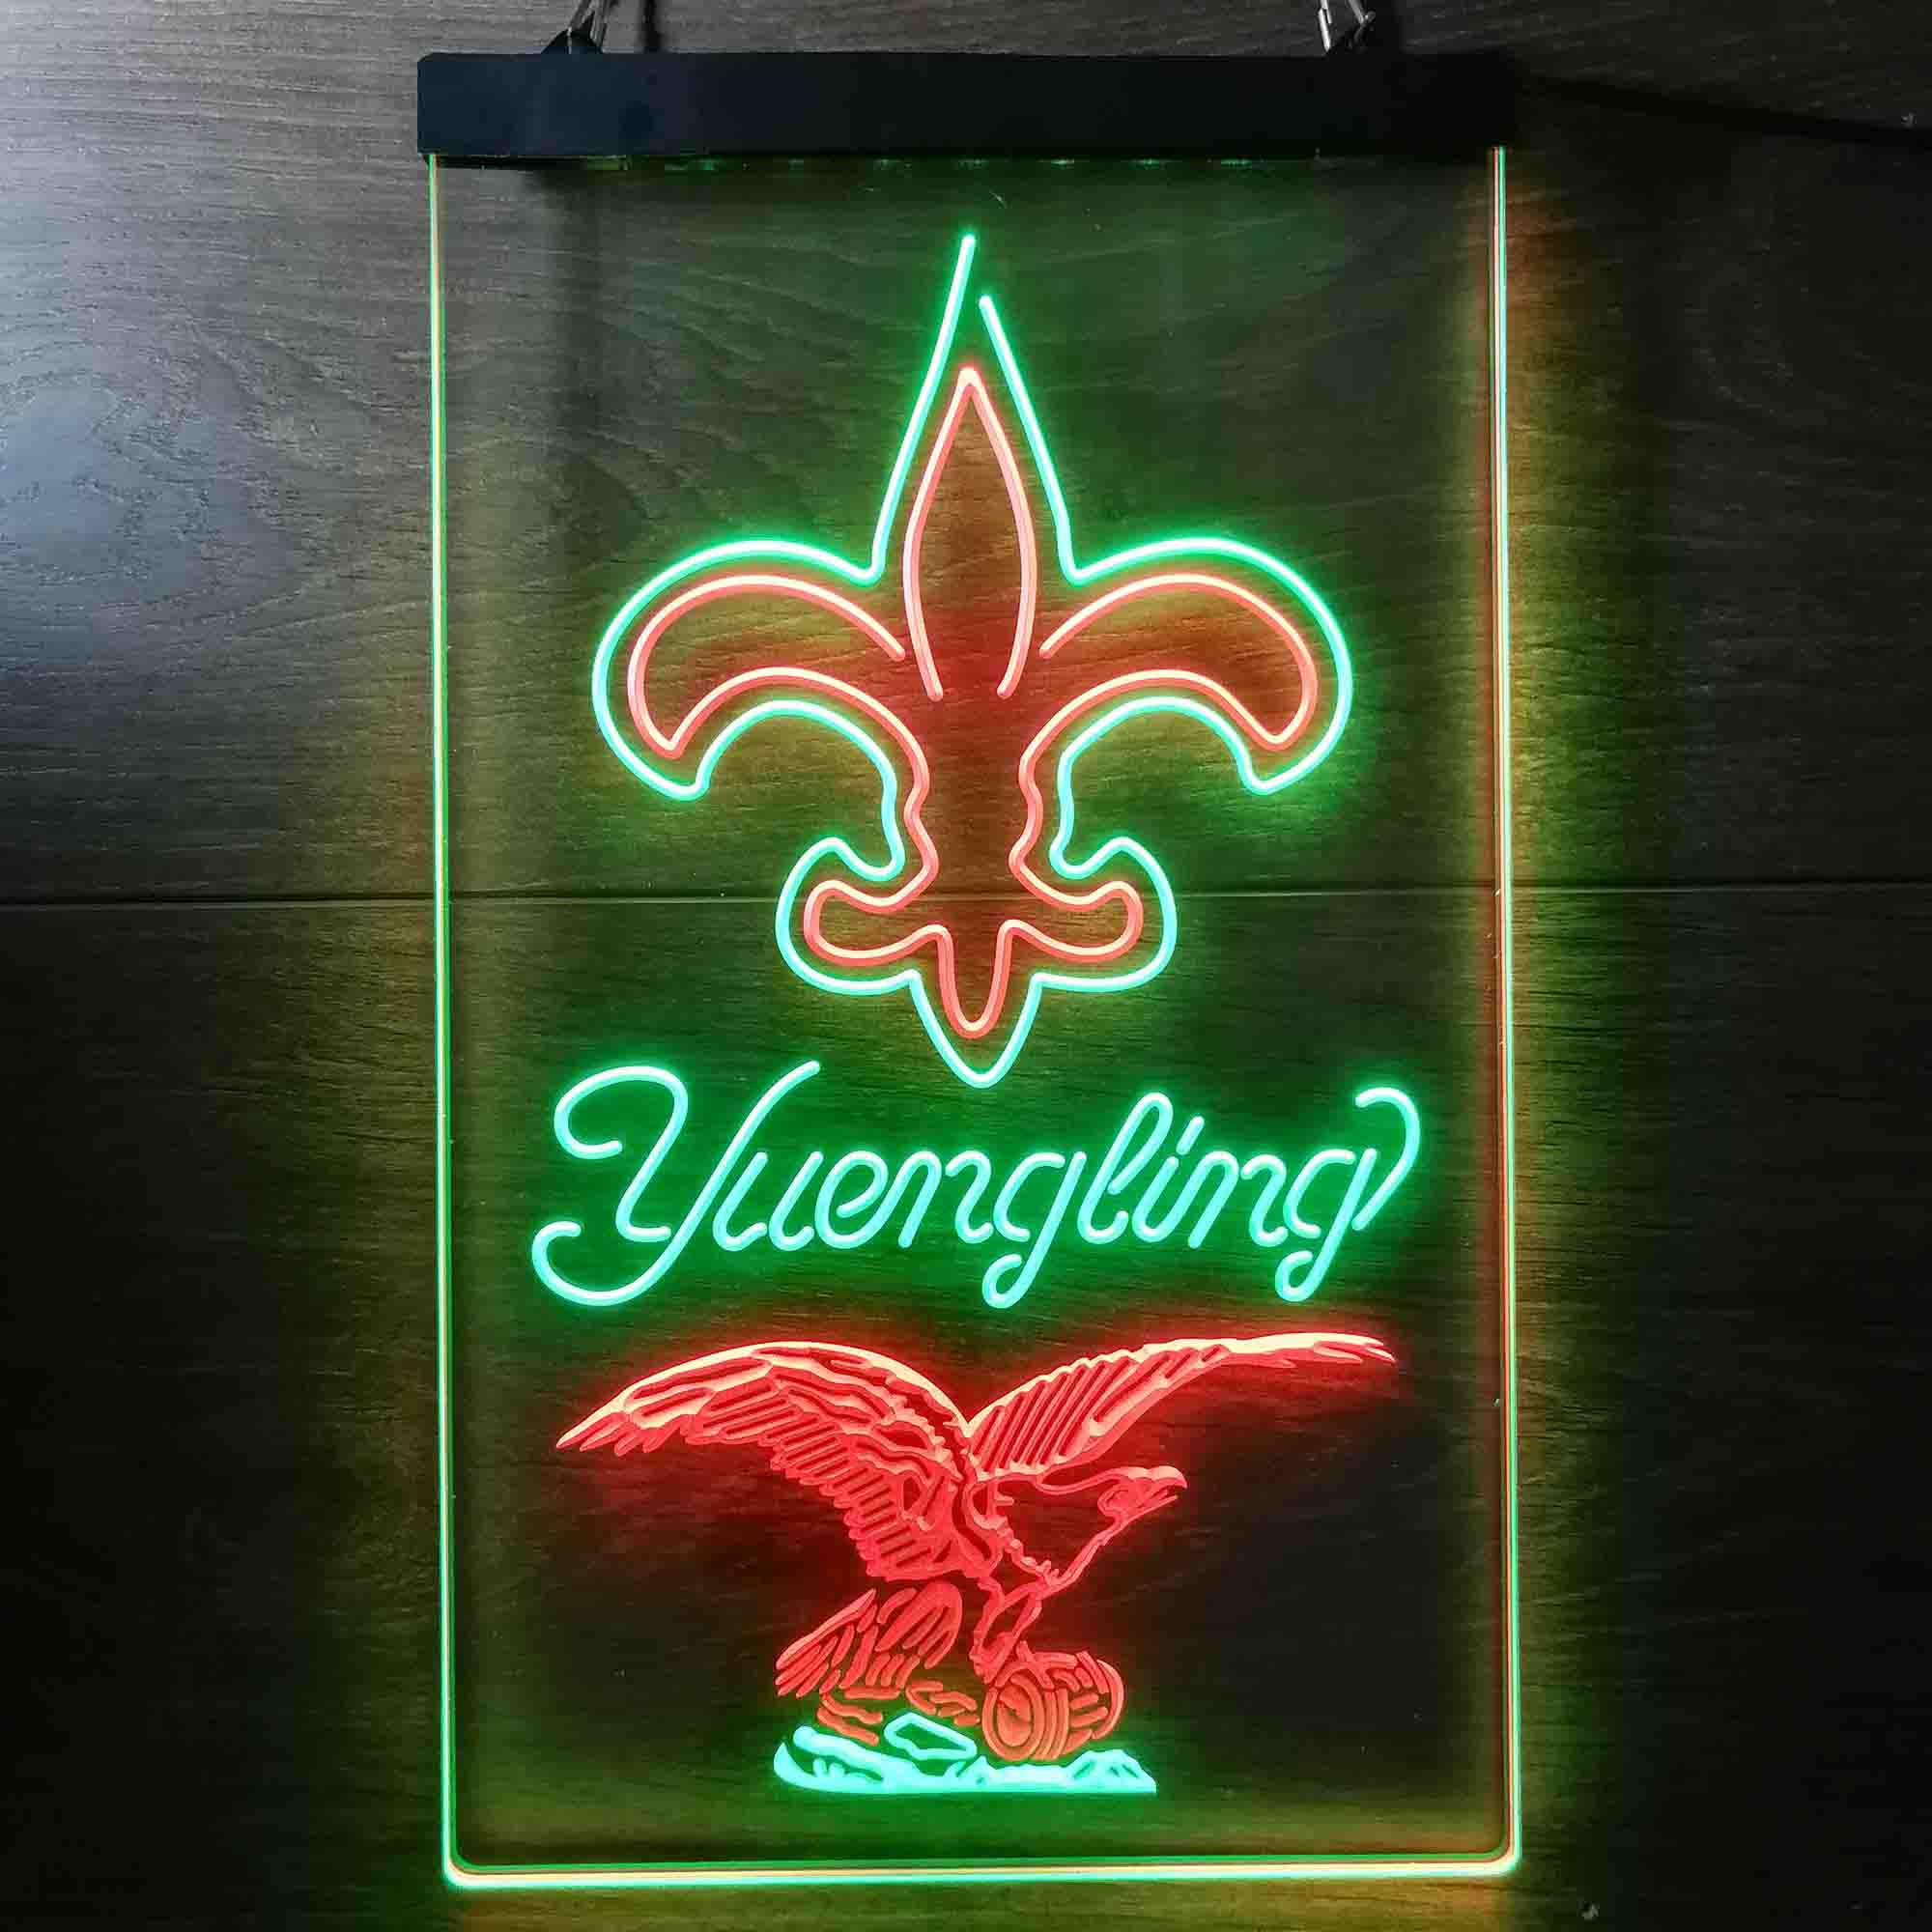 Yuengling Bar New Orleans Saints Est. 1967 Neon-Like LED Sign